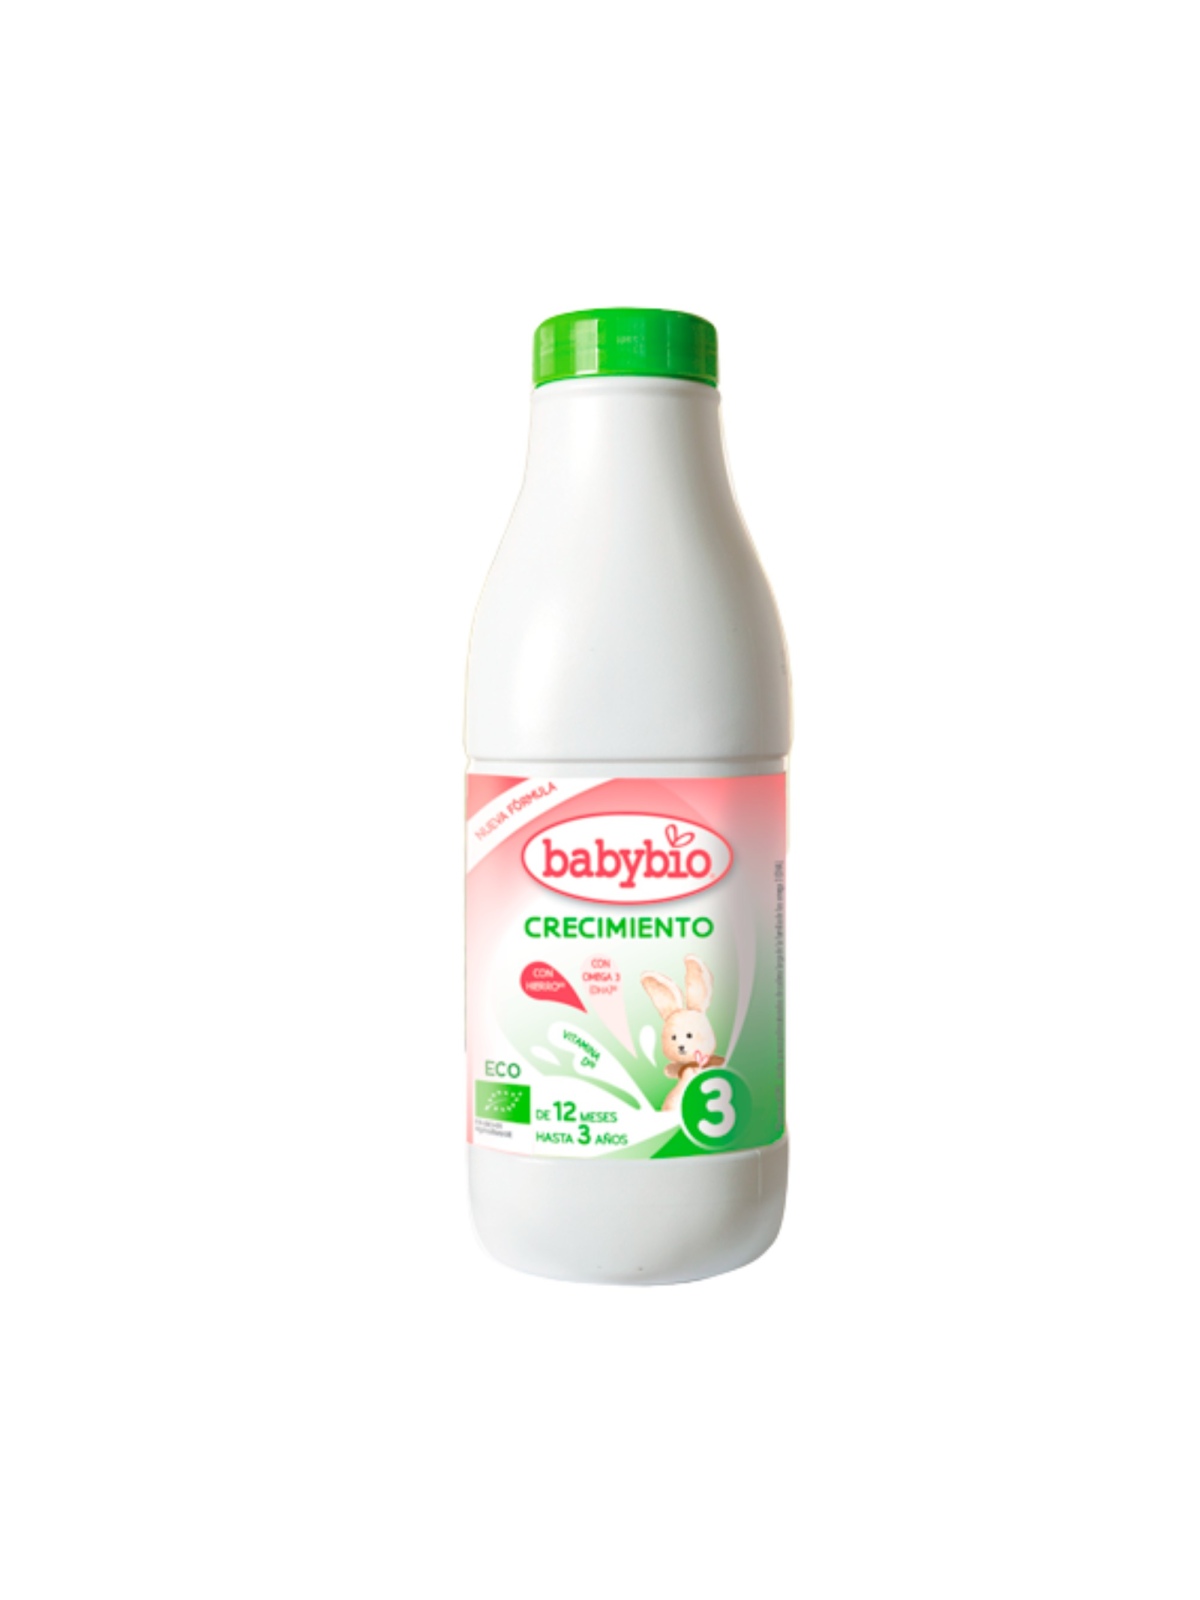 Compra Leche de vaca Babybio PRIMEA 1 ( 0-6 meses ) 800gr 